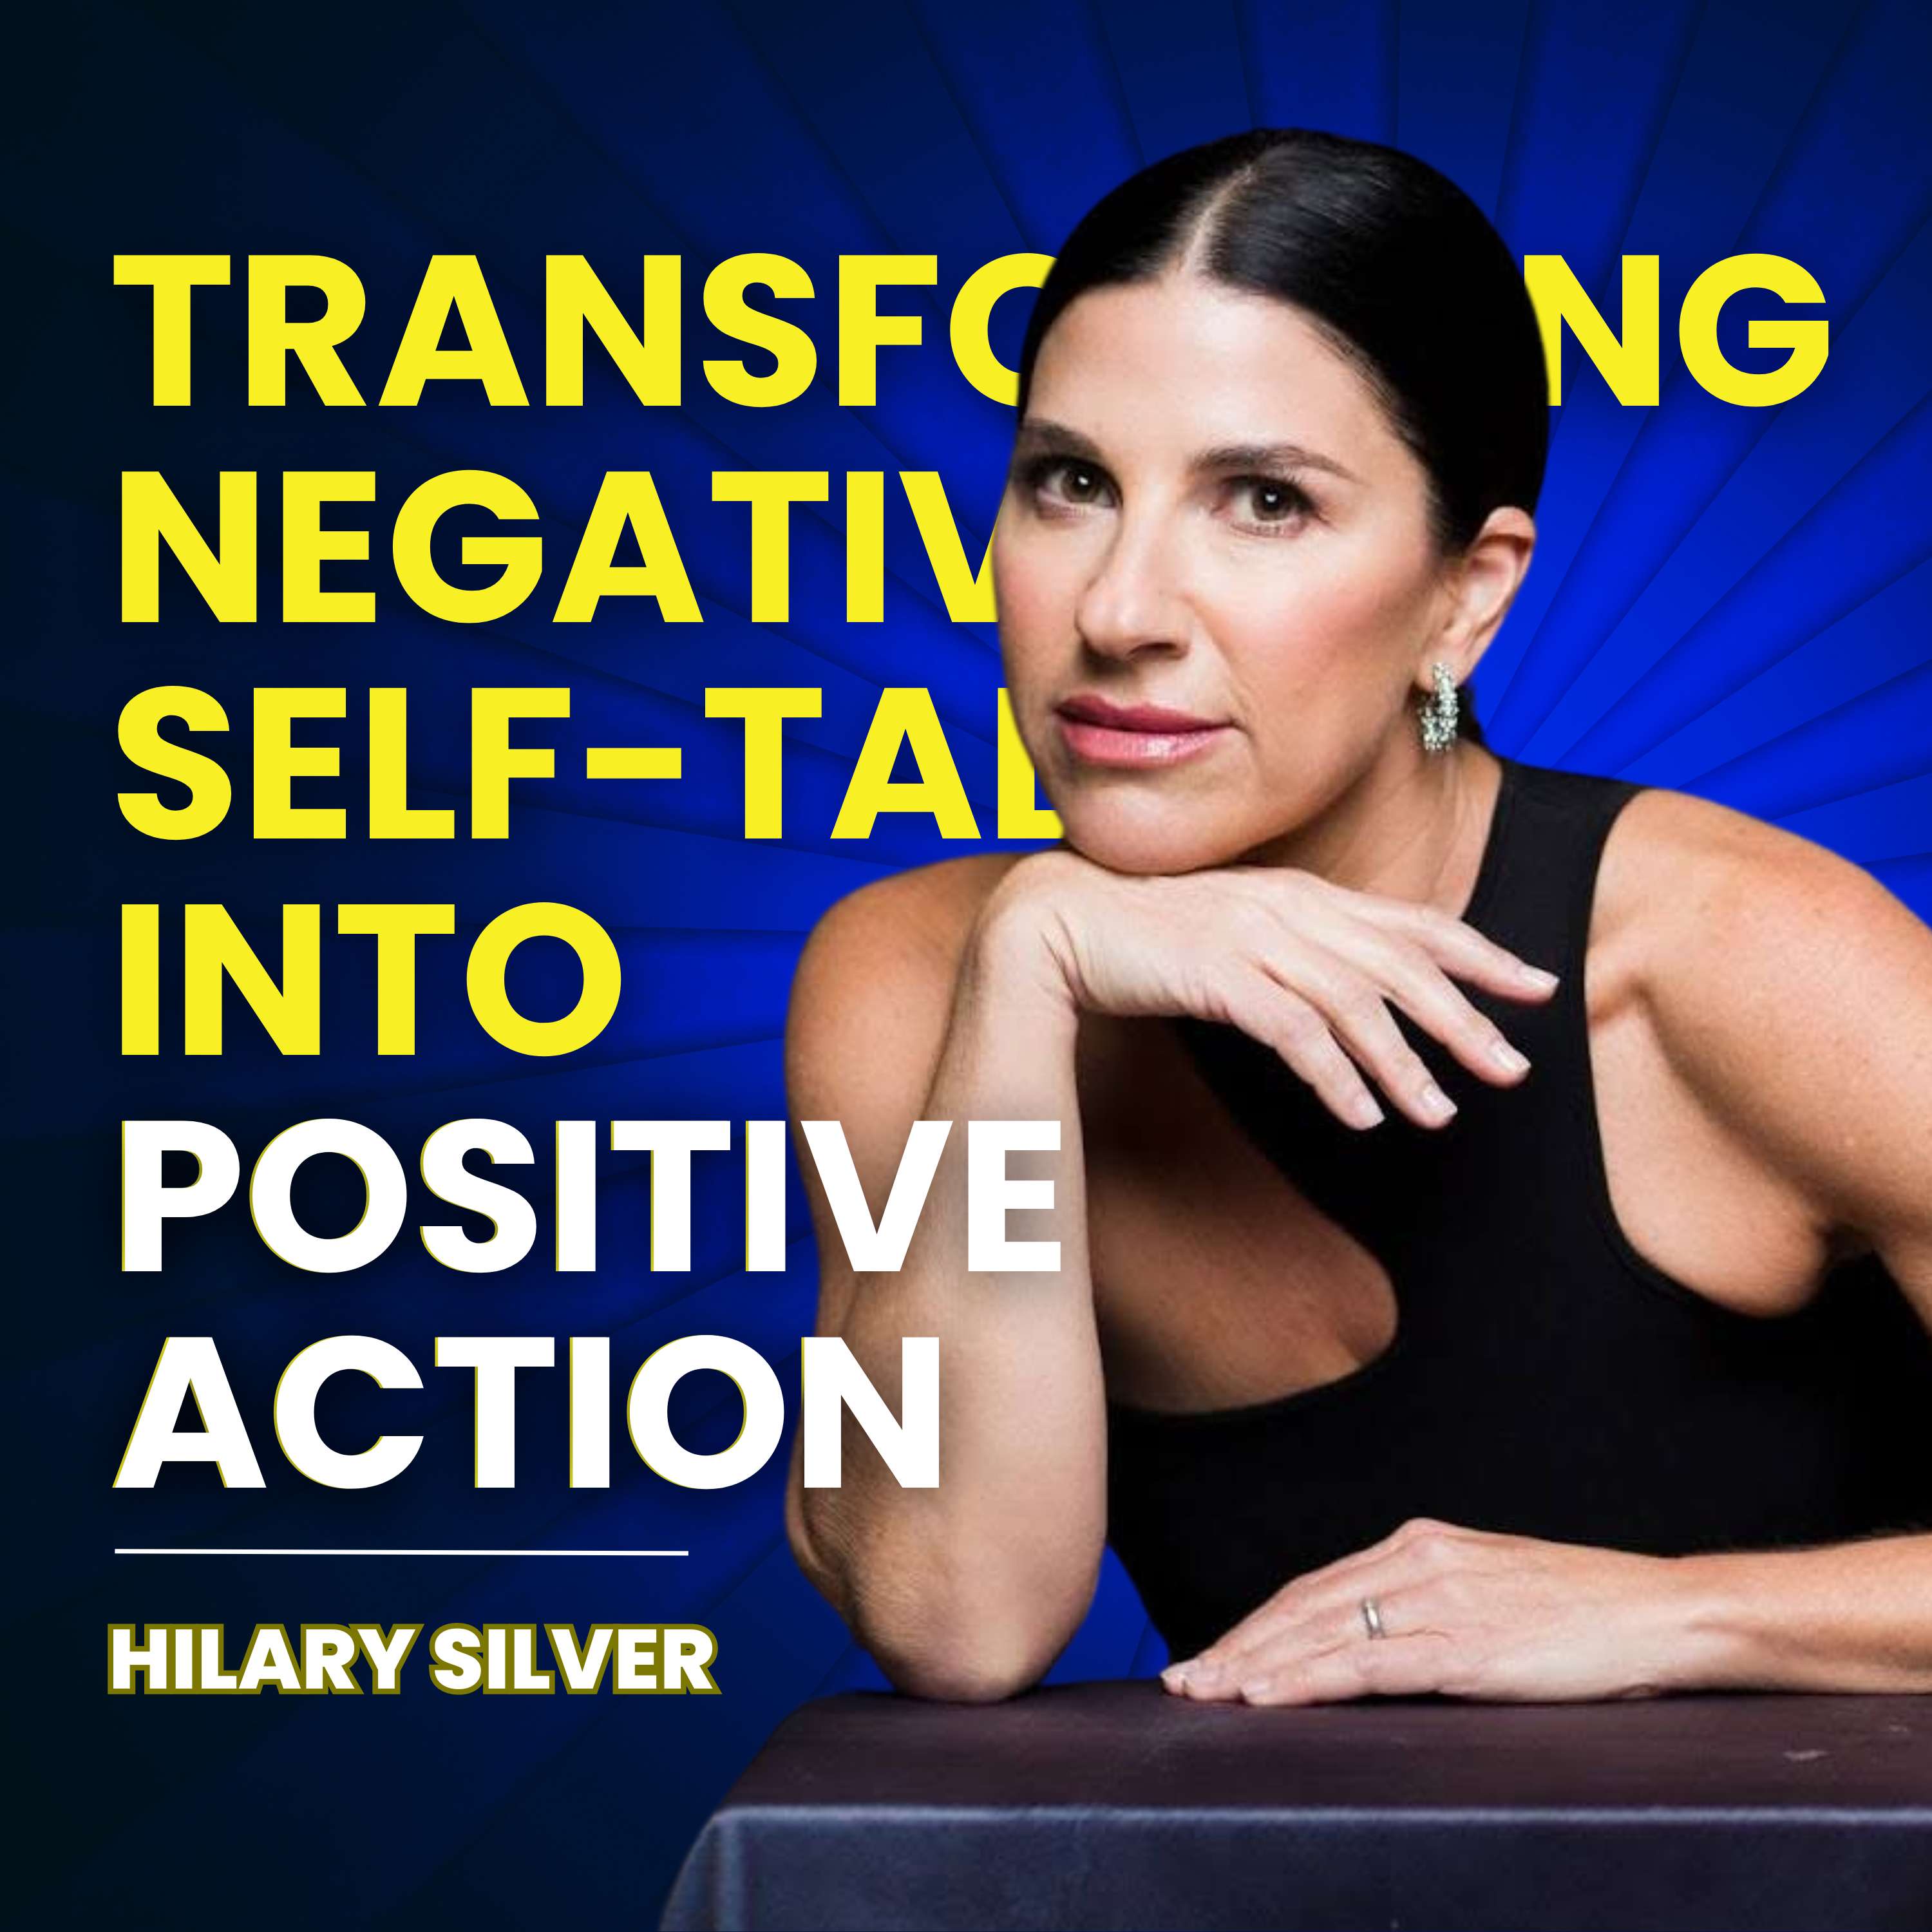 Transforming Negative Self-Talk into Positive Action